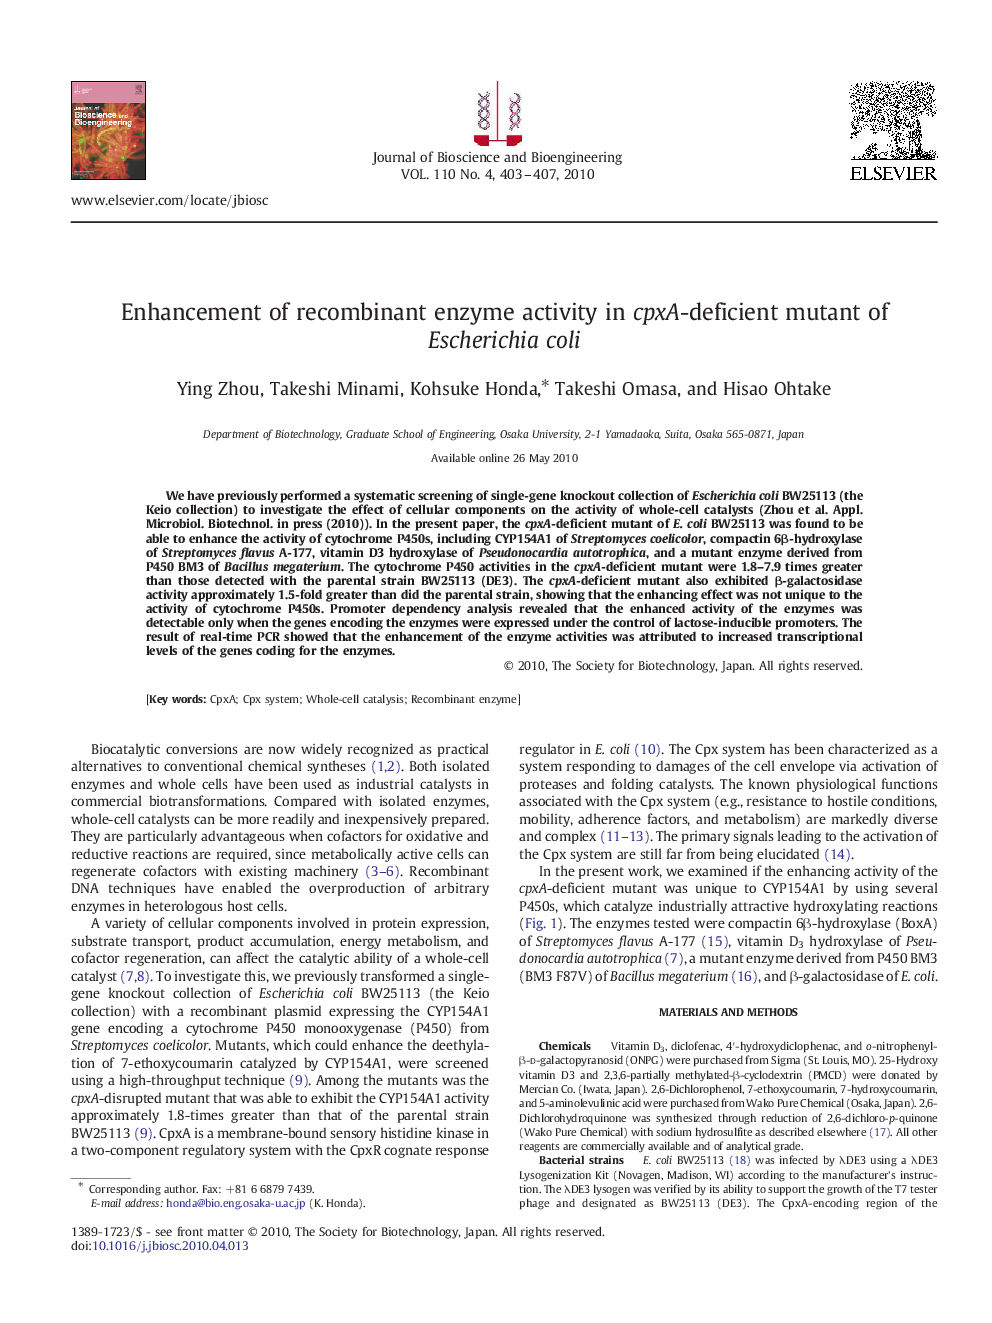 Enhancement of recombinant enzyme activity in cpxA-deficient mutant of Escherichia coli